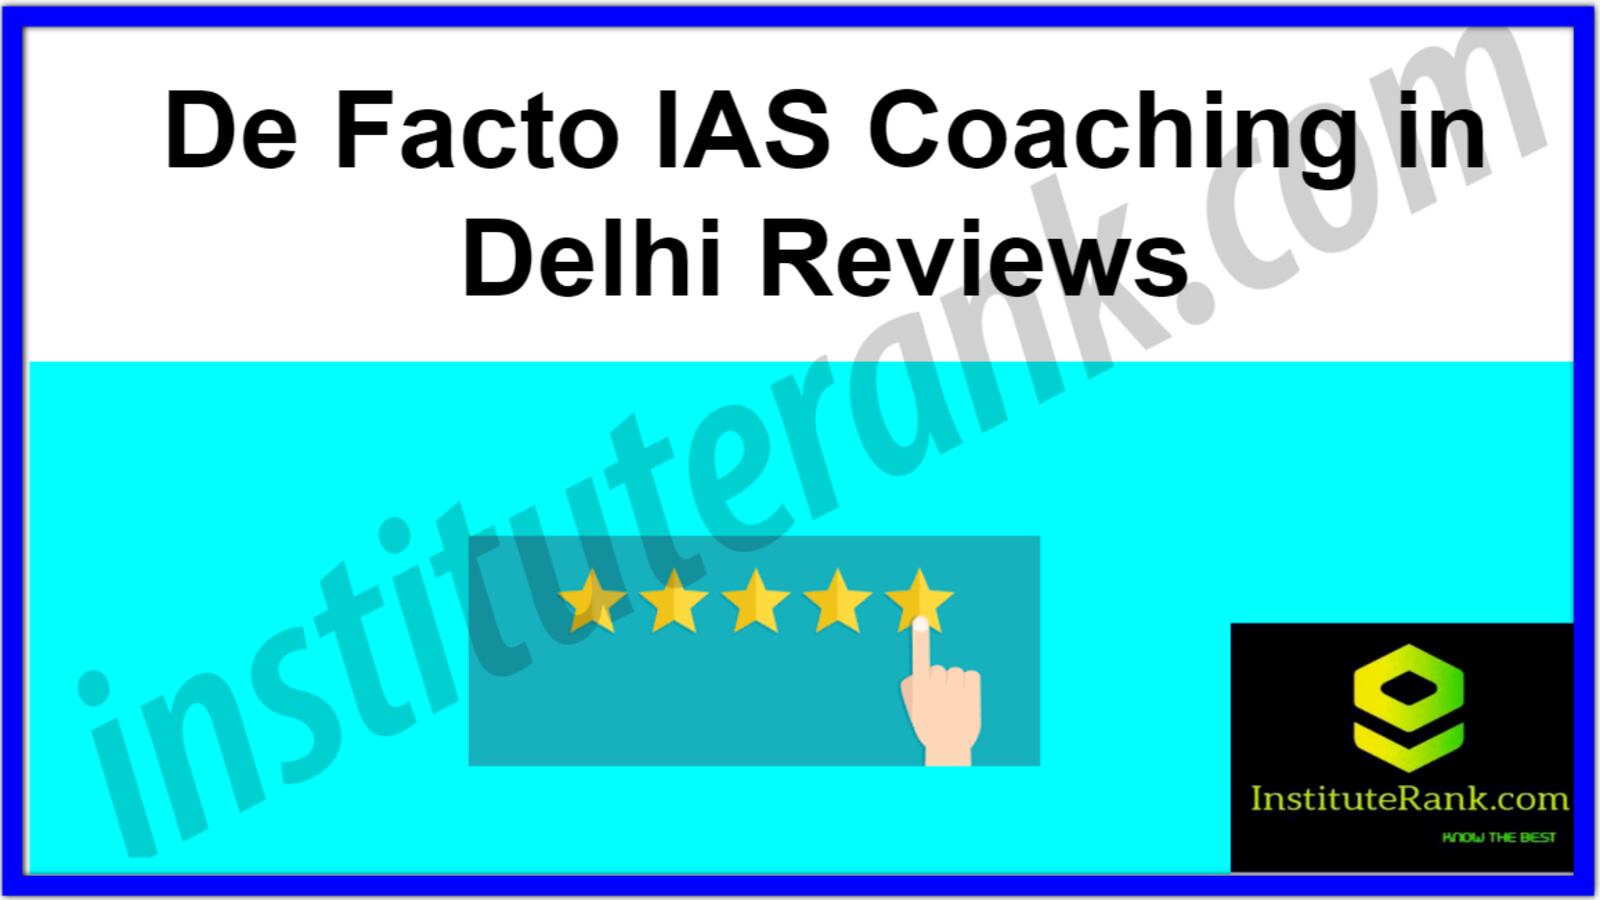 De Facto IAS Coaching in Delhi